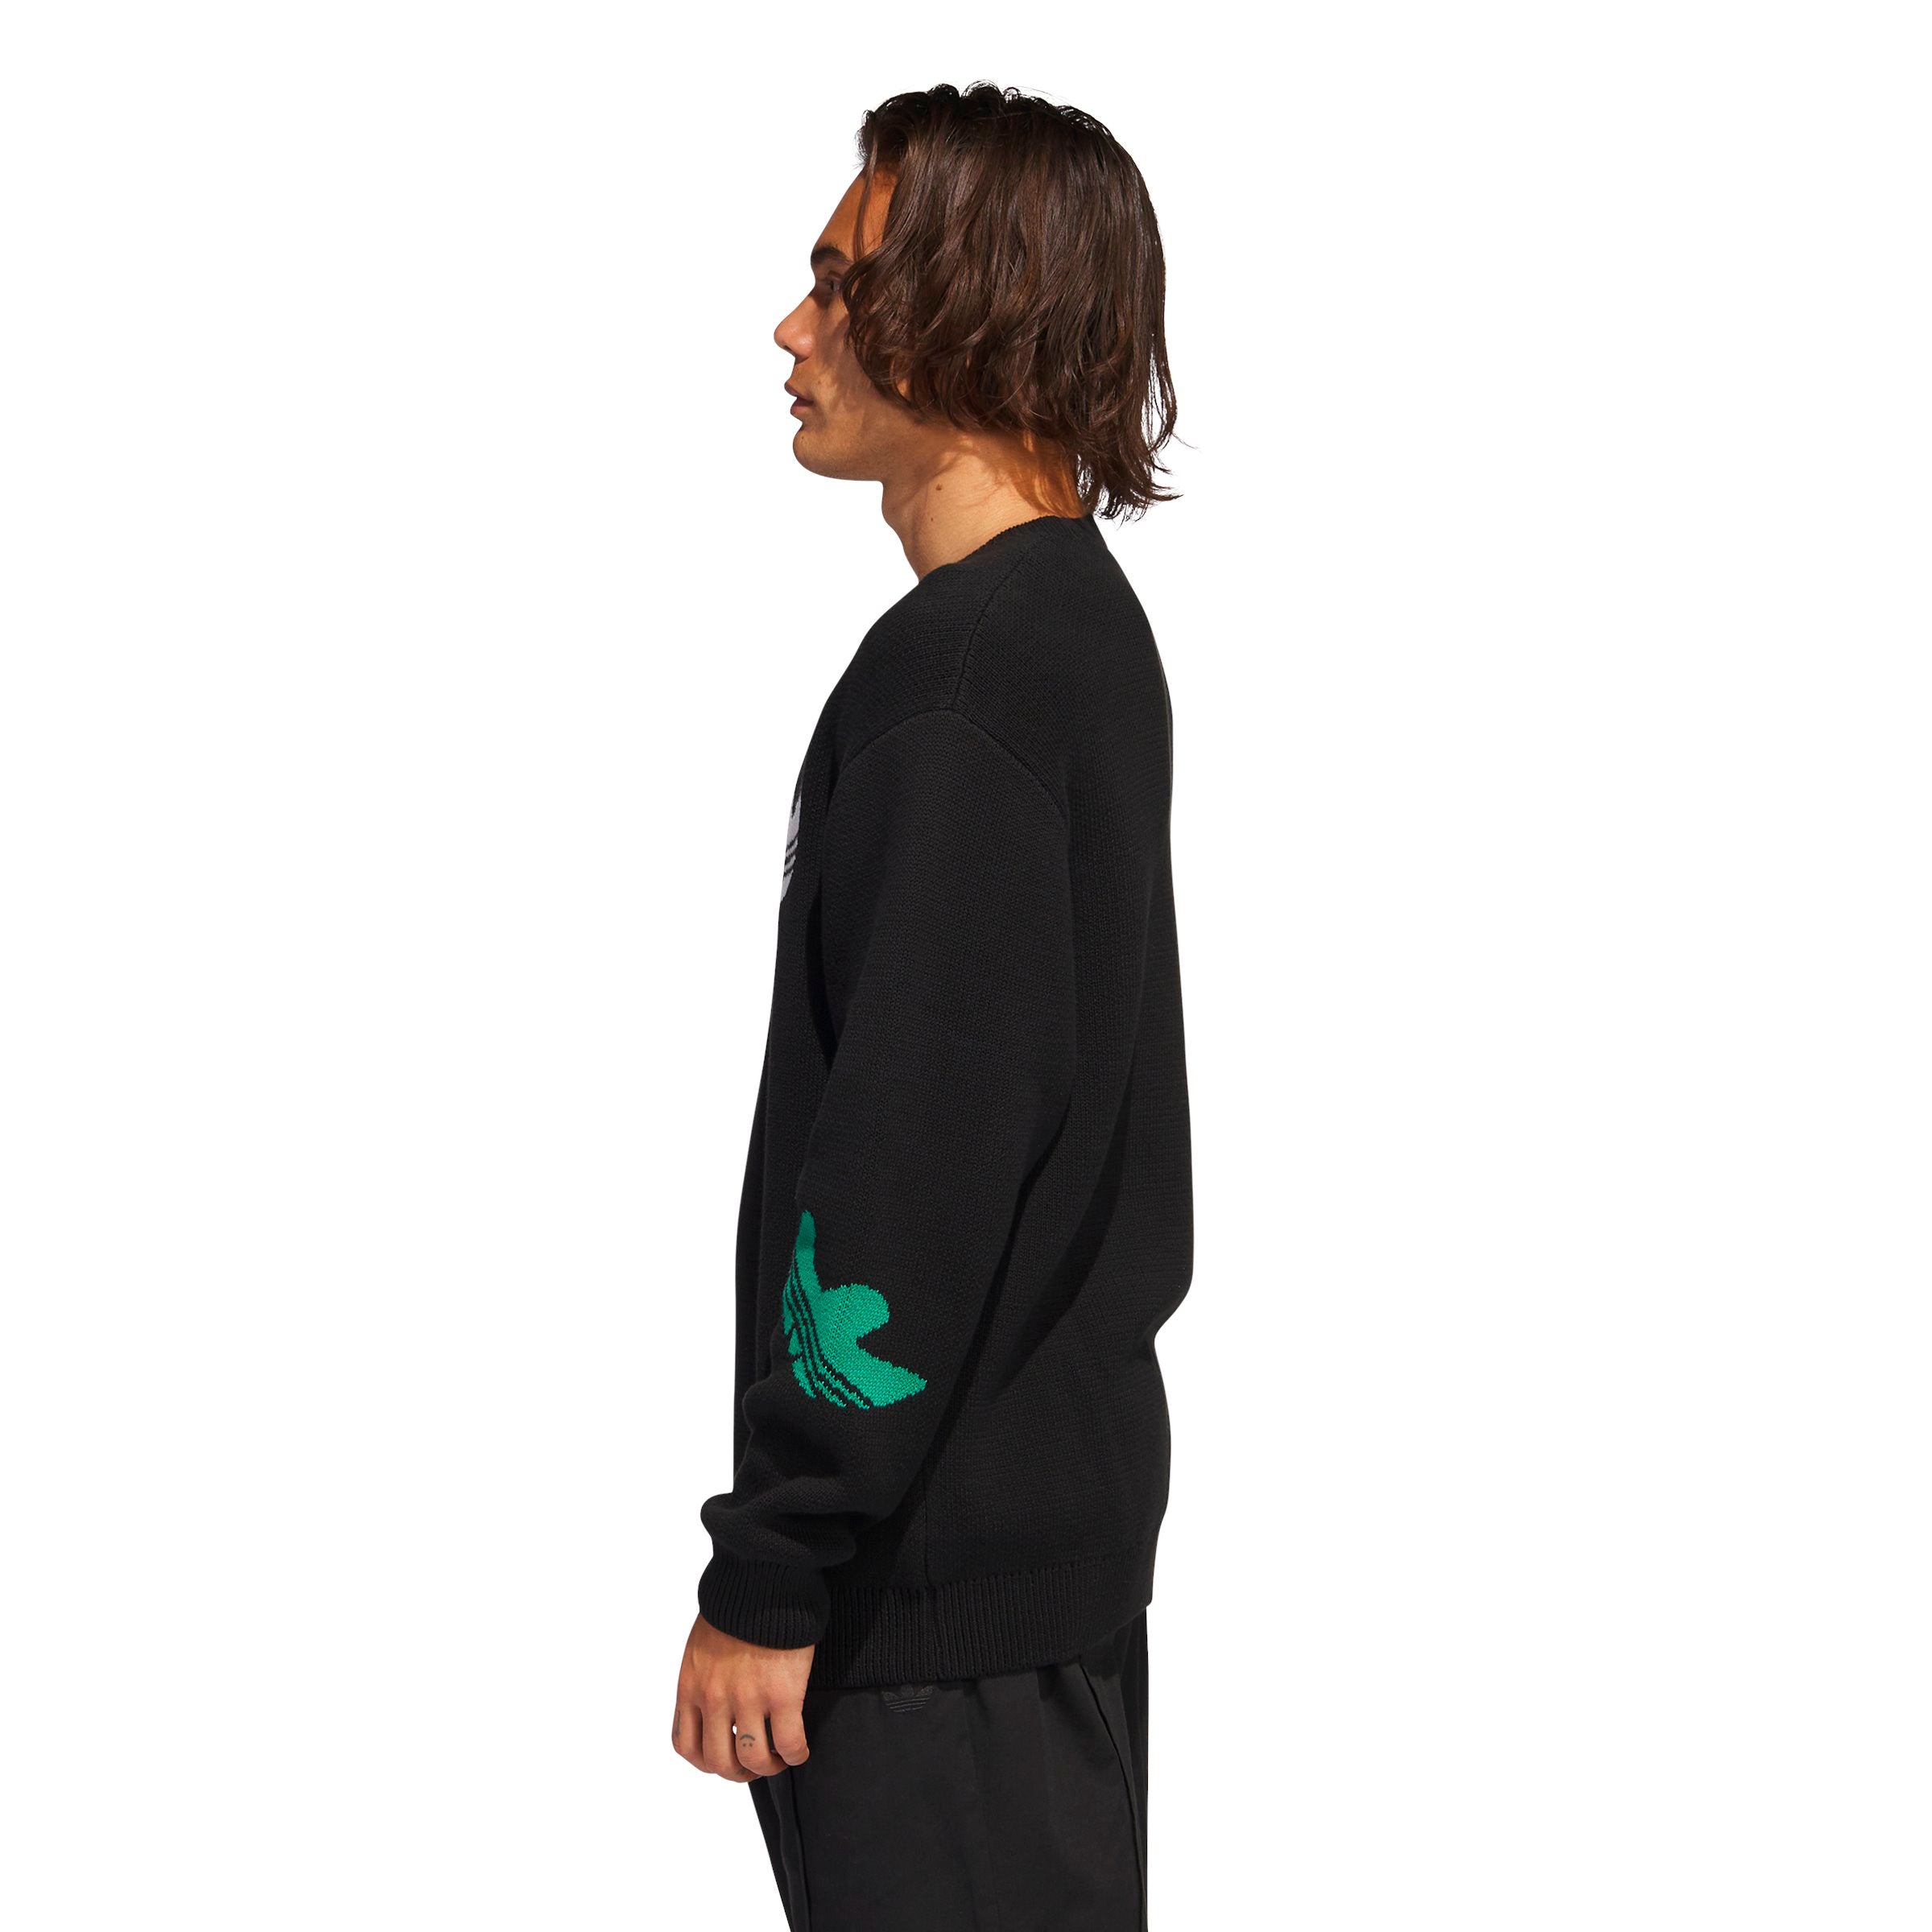 Adidas Shmoo Knit Sweater - Black Sweater adidas Skateboarding 